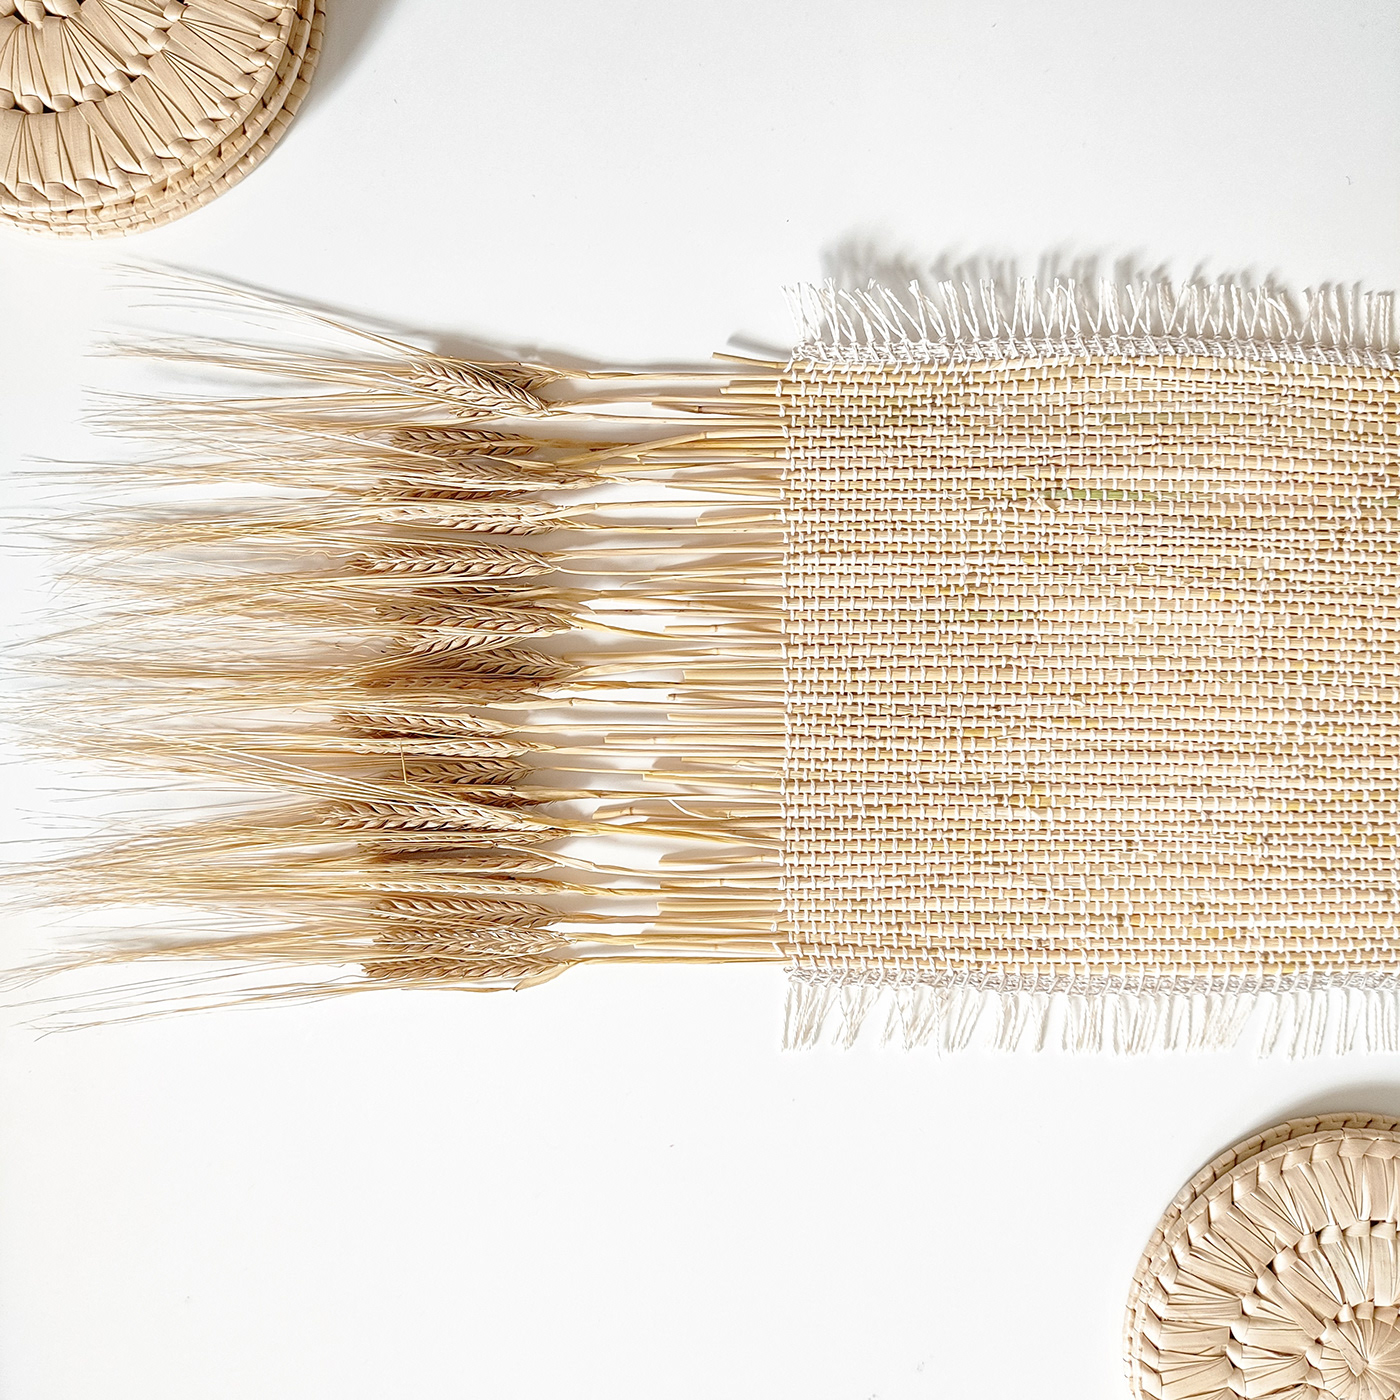 fiber Flora handmade ruční tkaní weaving